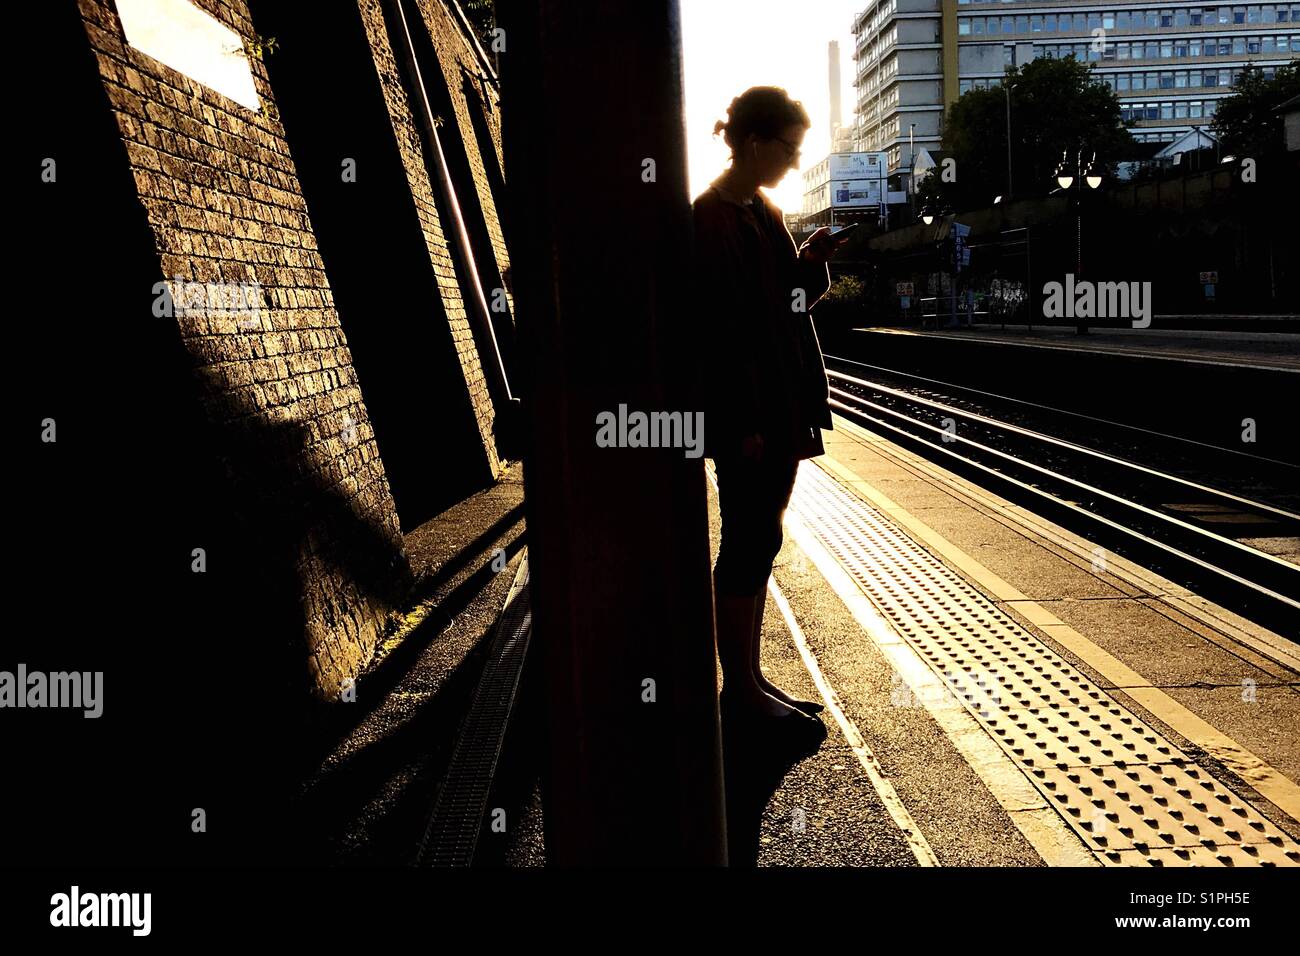 London train station Stock Photo